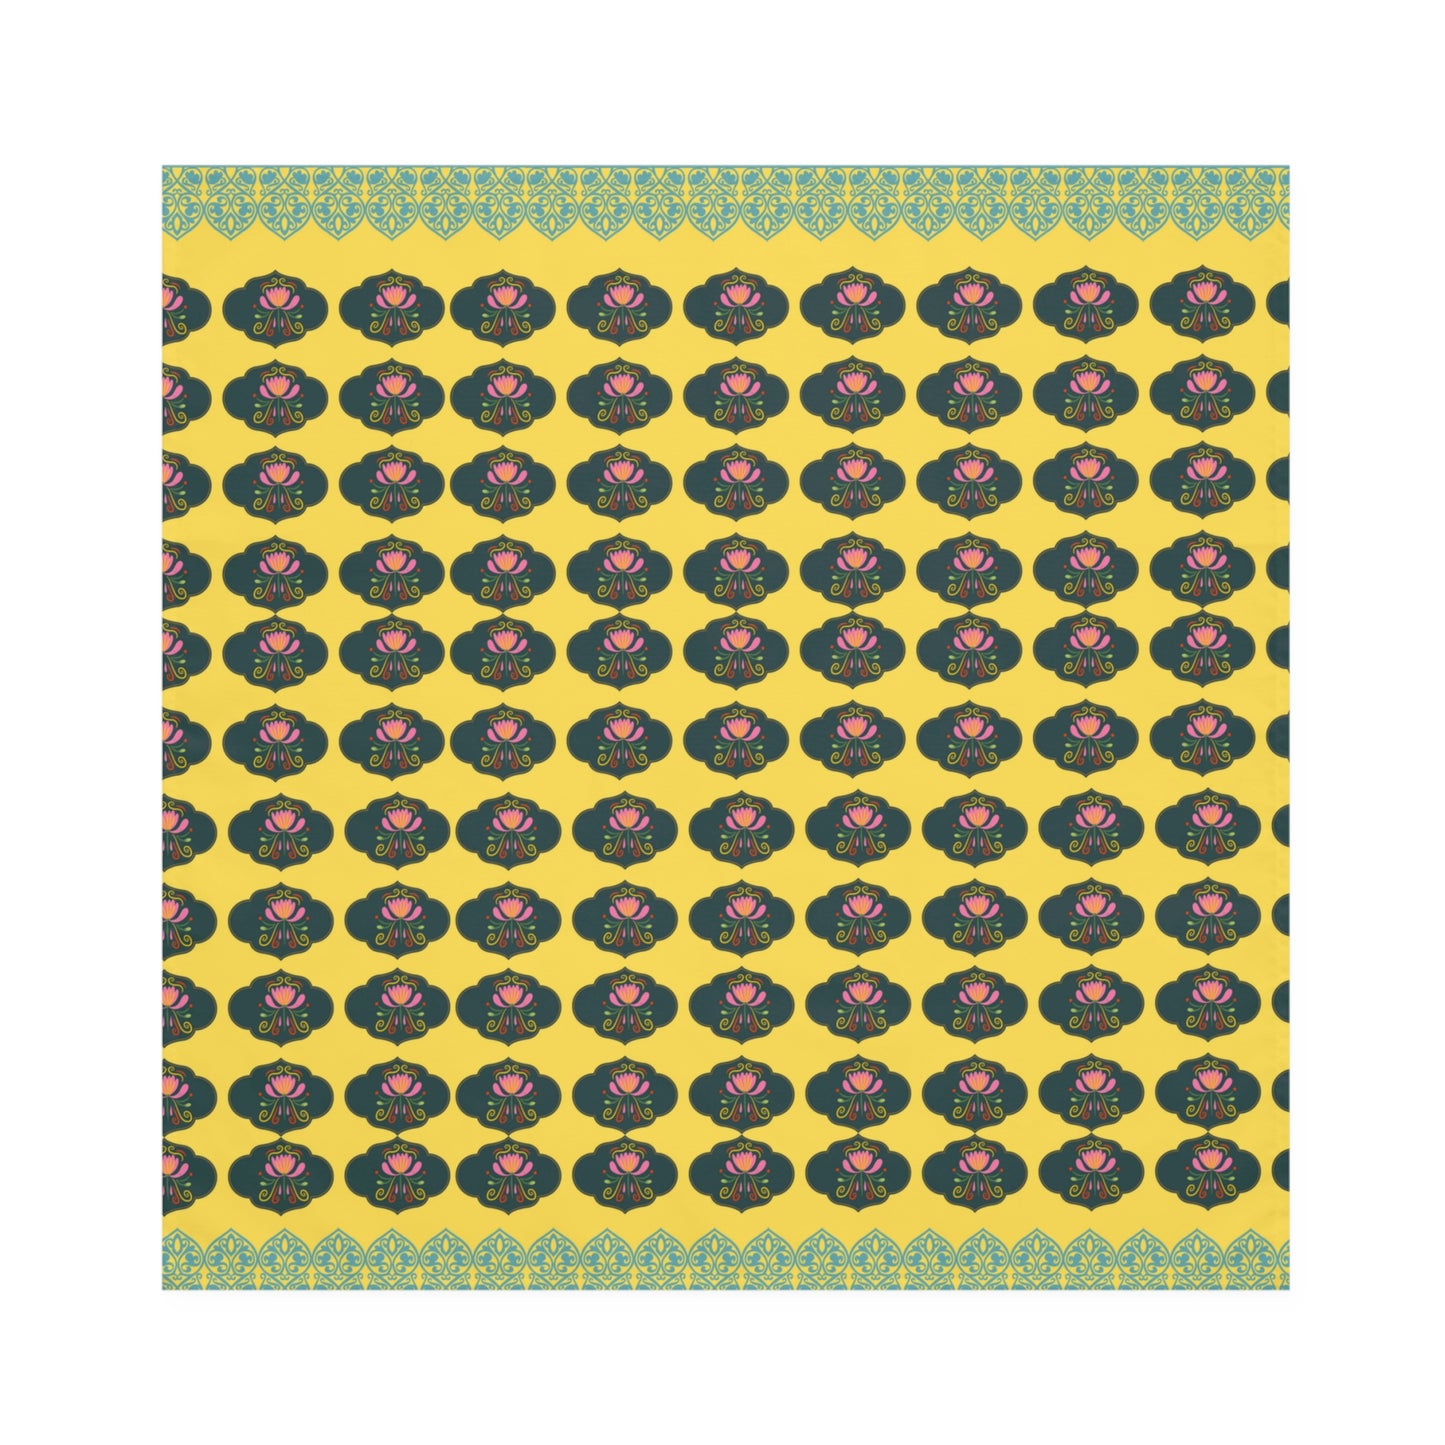 Lotus print ethnic art 4-piece Kitchen Towel Set